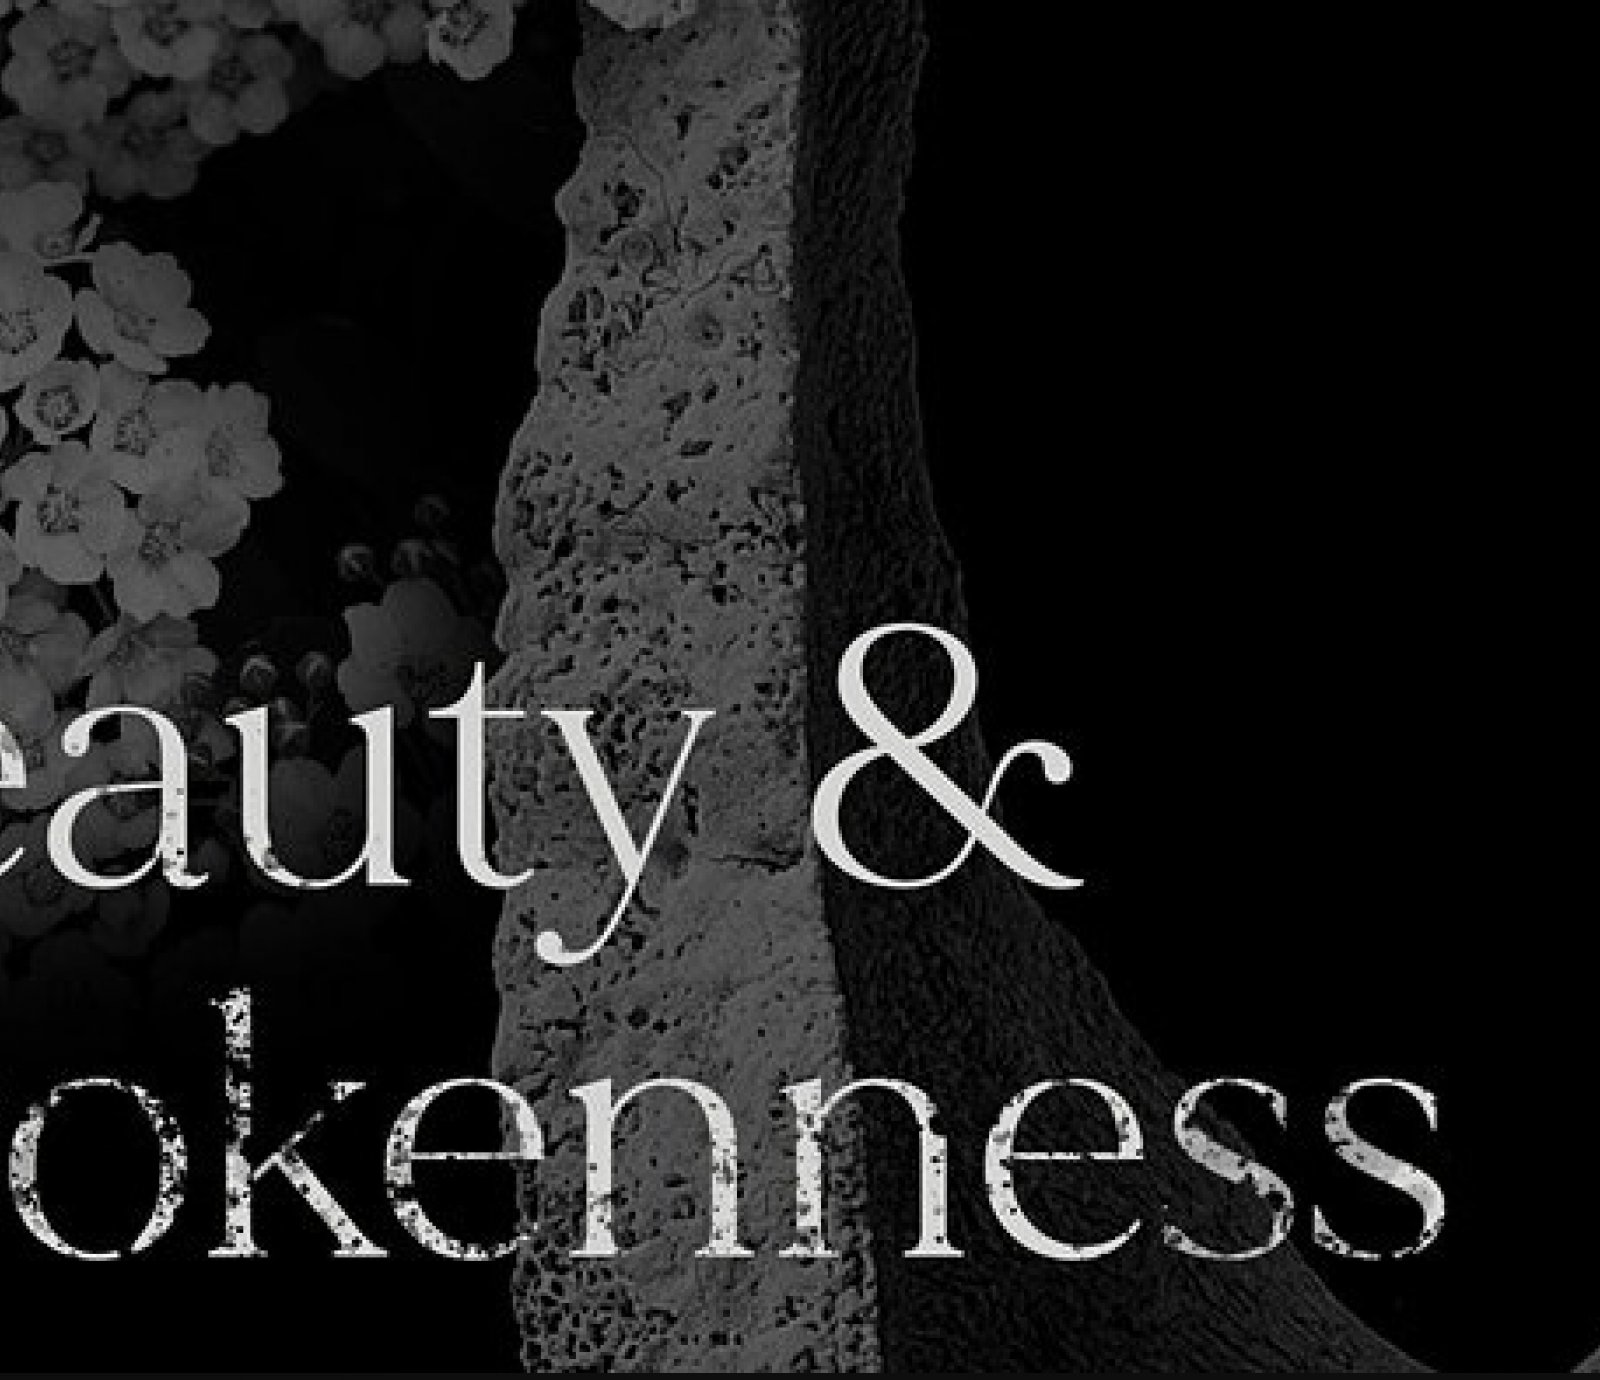 Beauty & Brokenness